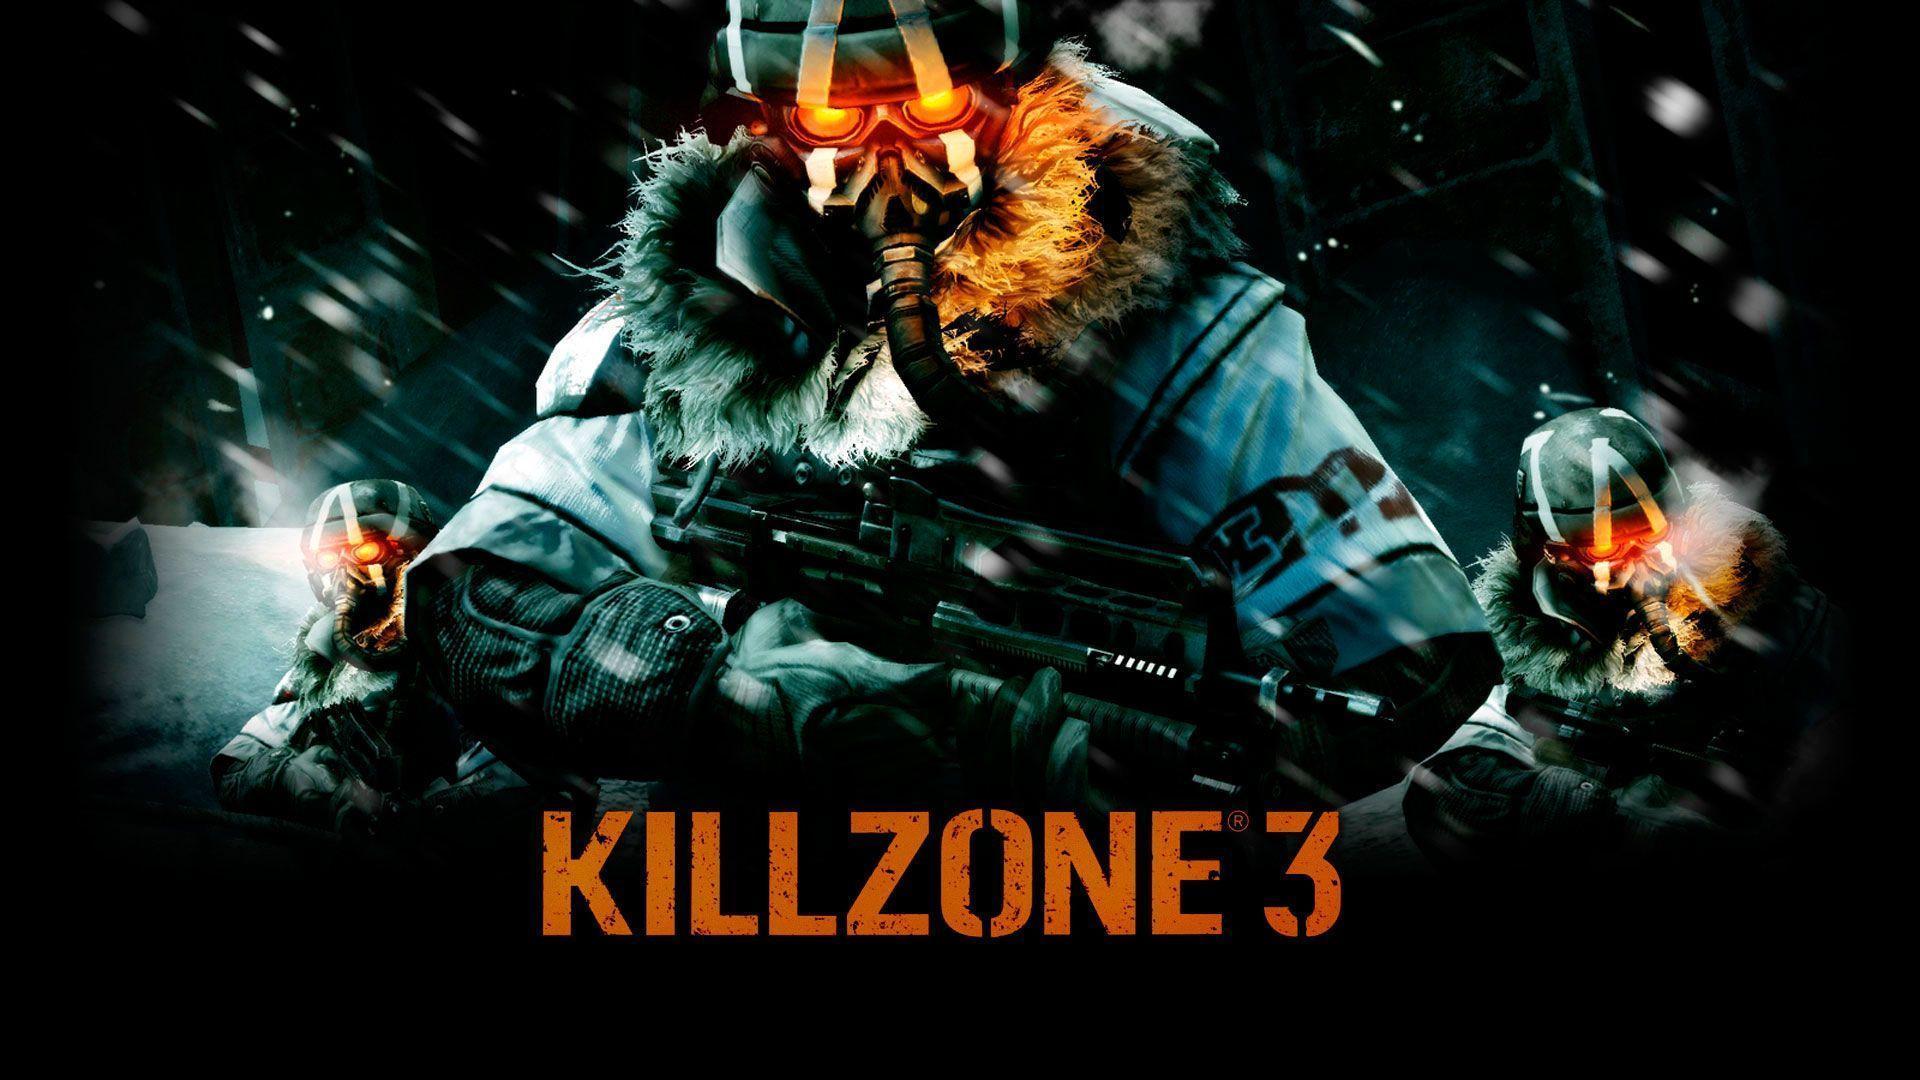 Killzone 3 Wallpaper in HD